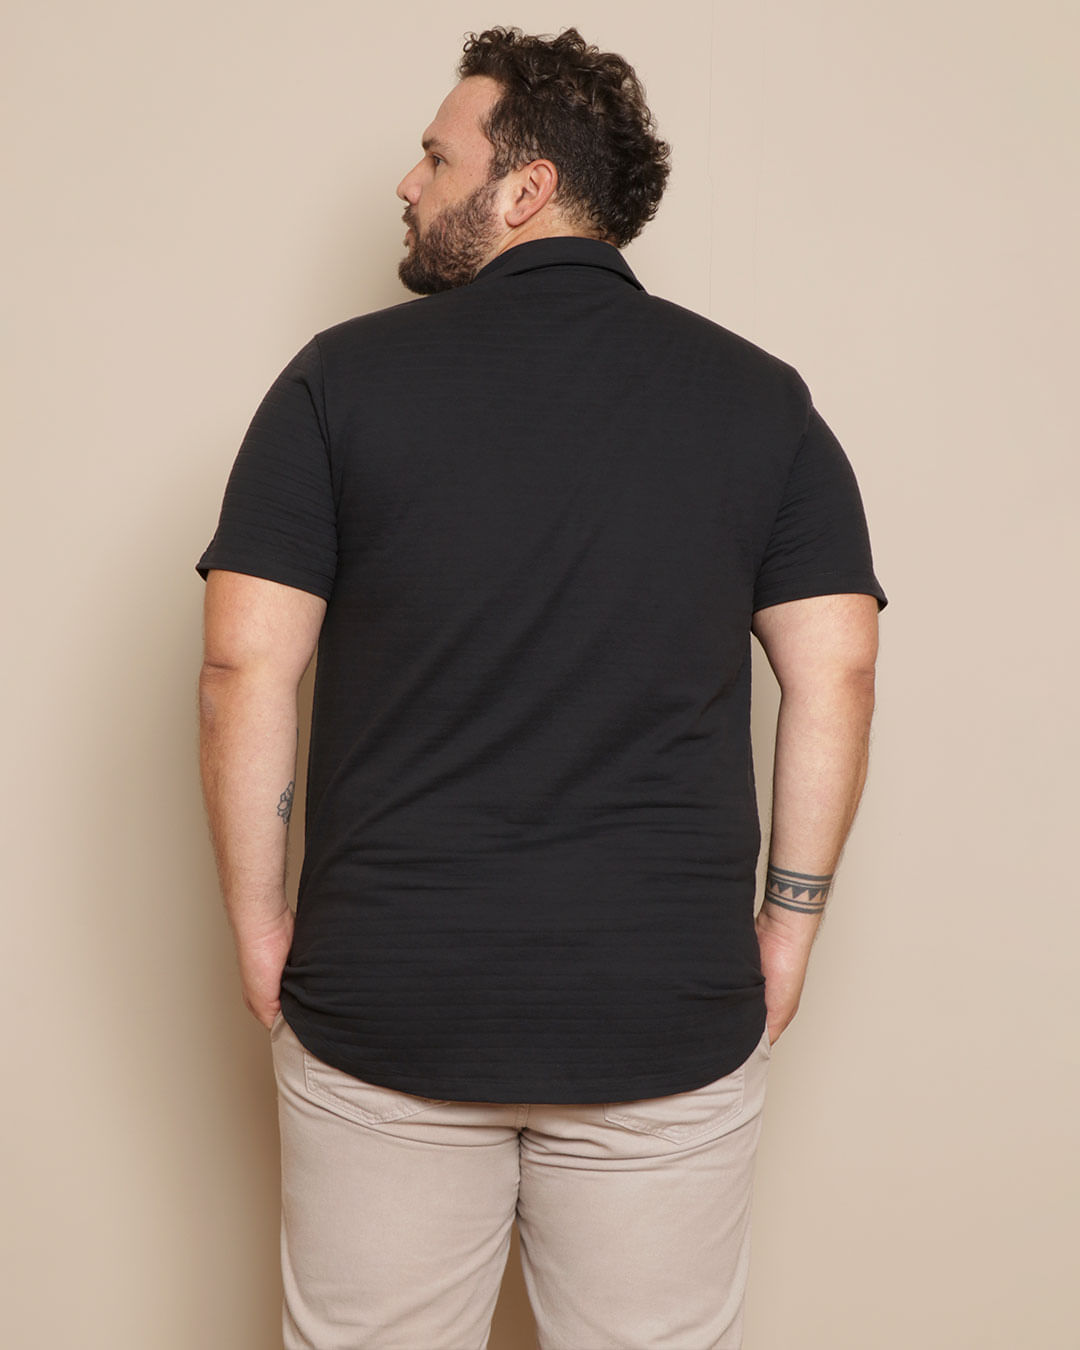 Camisa-Plus-Size-Masculina-Listrada-Texturizada-Preta